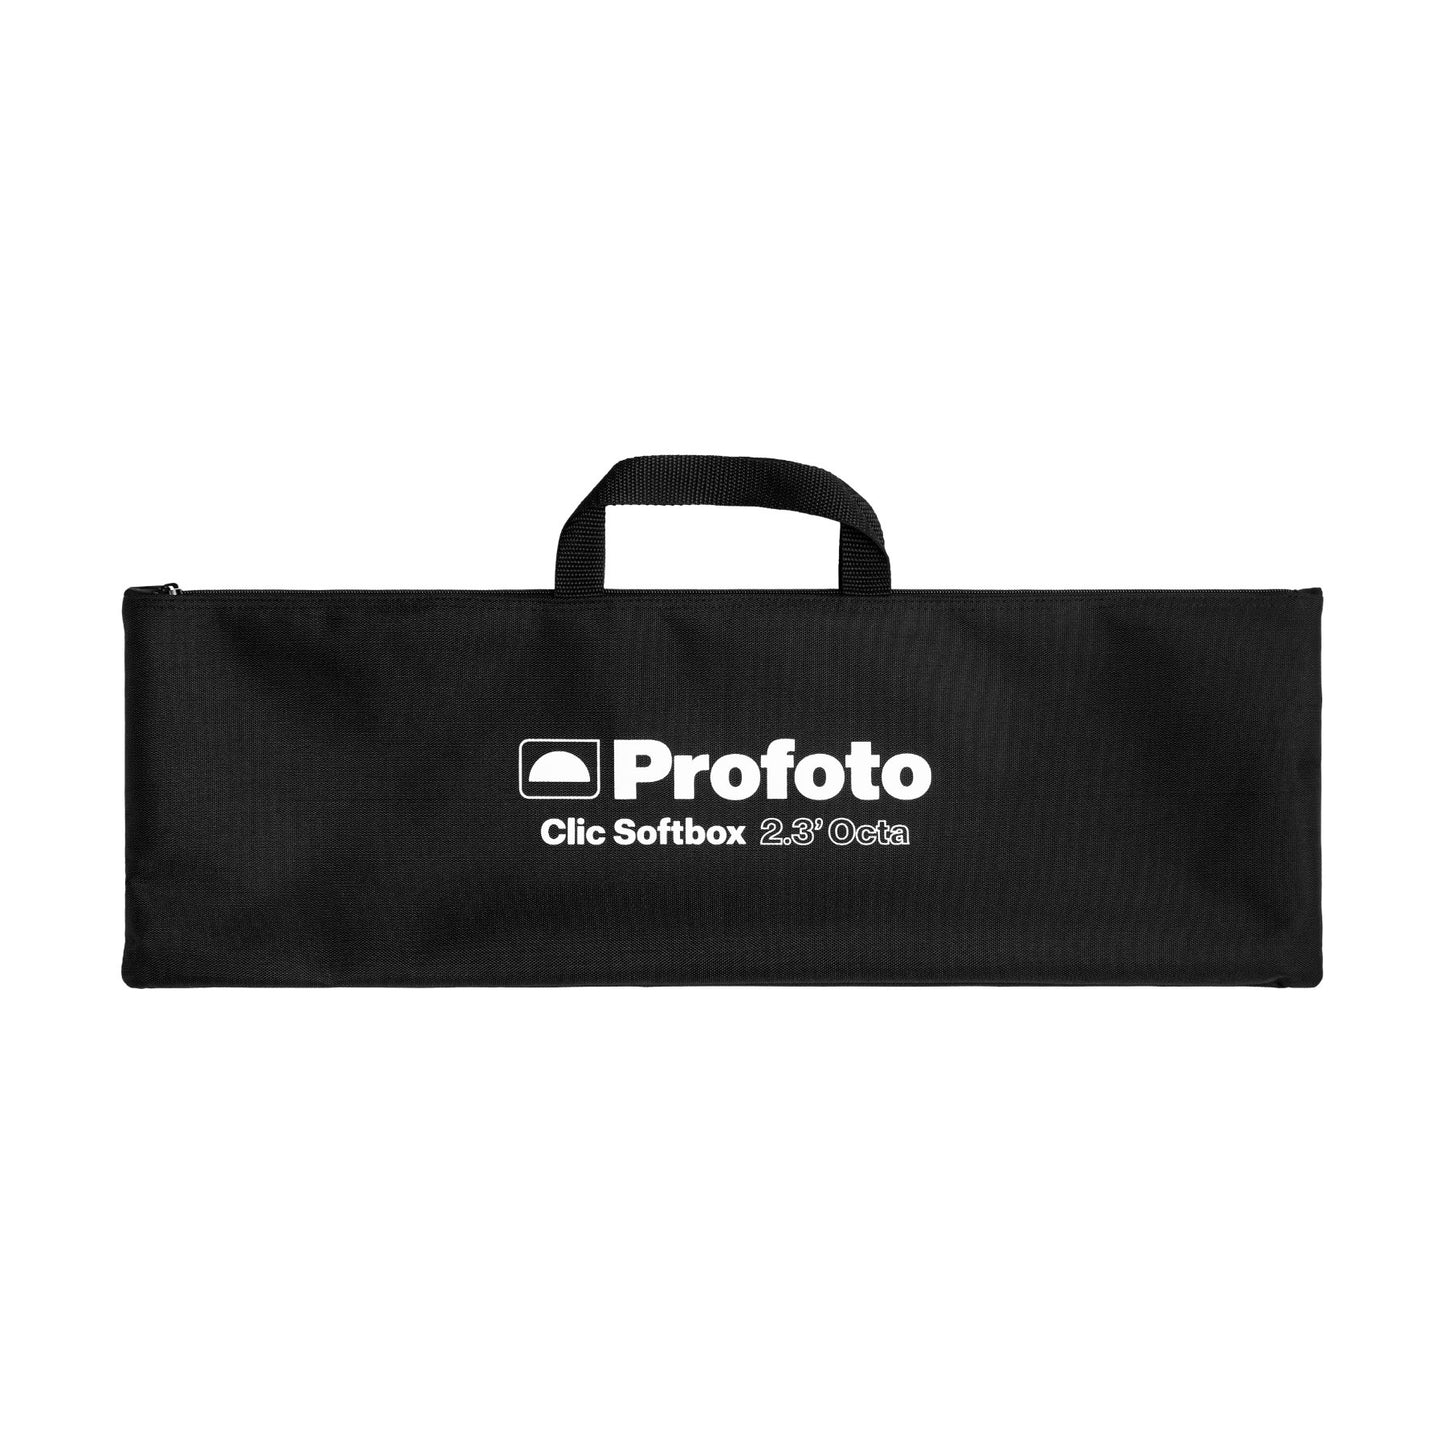 Buy Profoto Clic Softbox 2.3’ (70cm) Octa at Topic Store